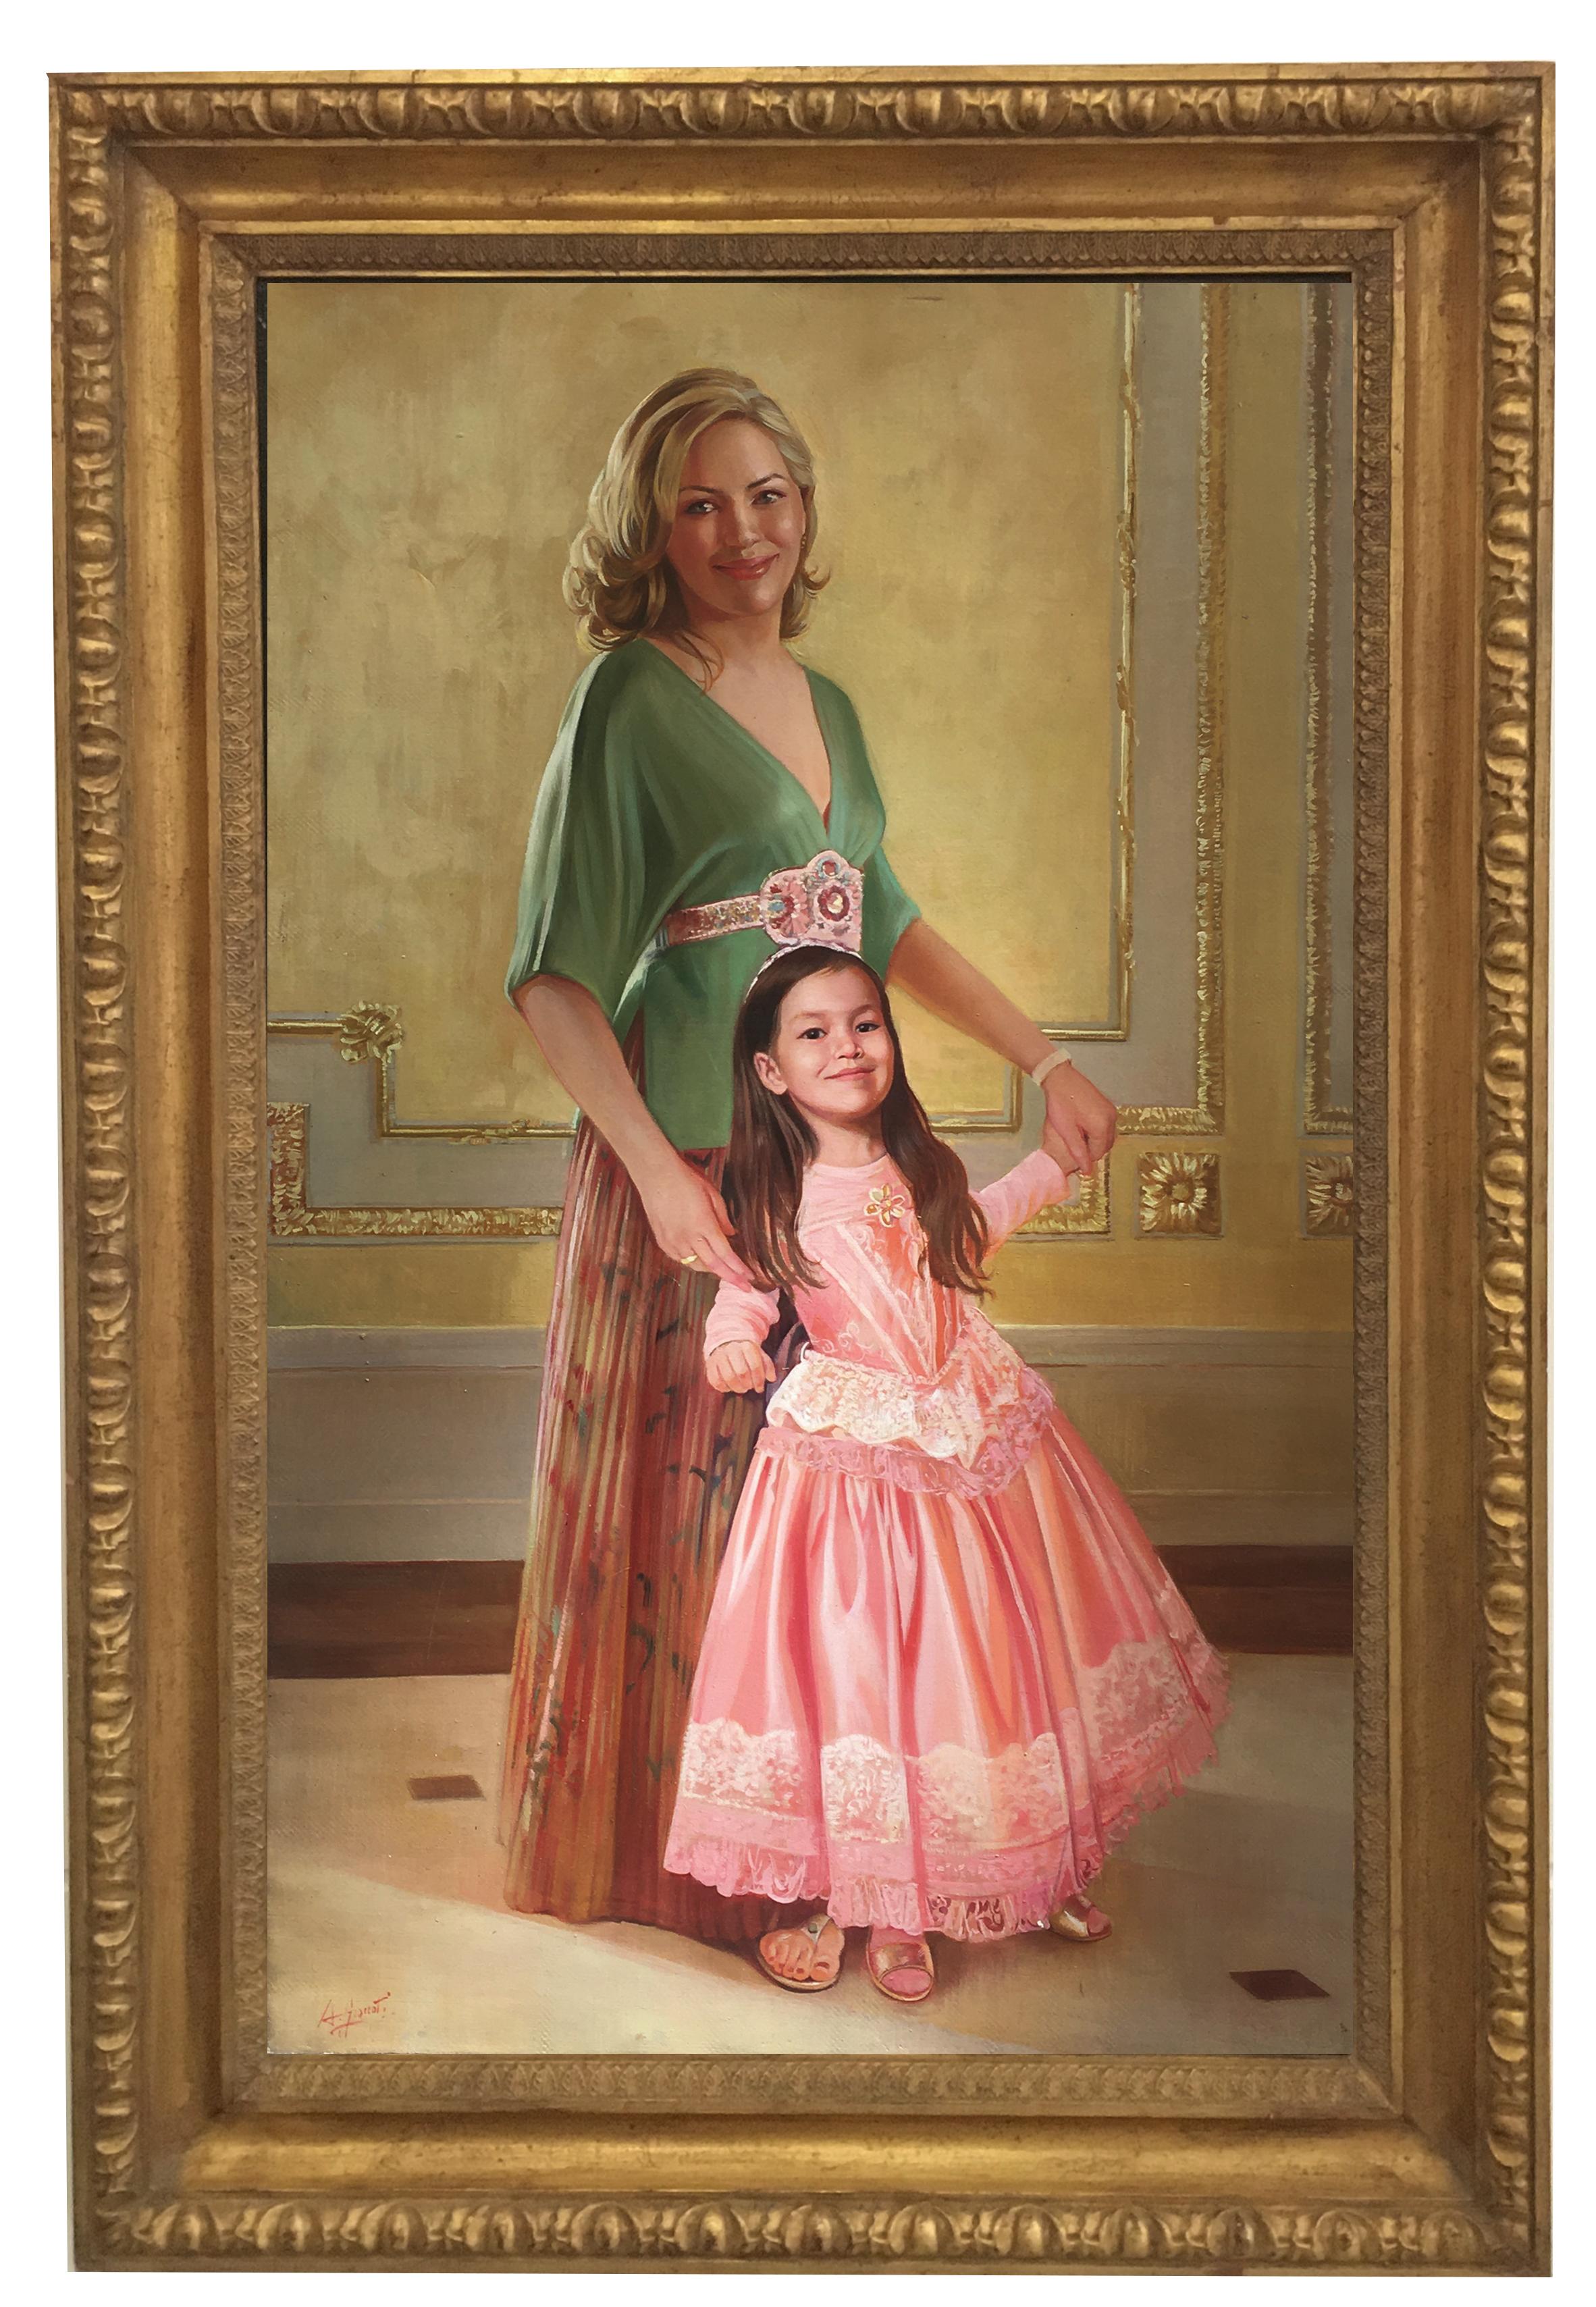 PORTRAIT OF MOTHER AND DAUGHTER - Angeo Granati - Peinture à l'huile figurative italienne